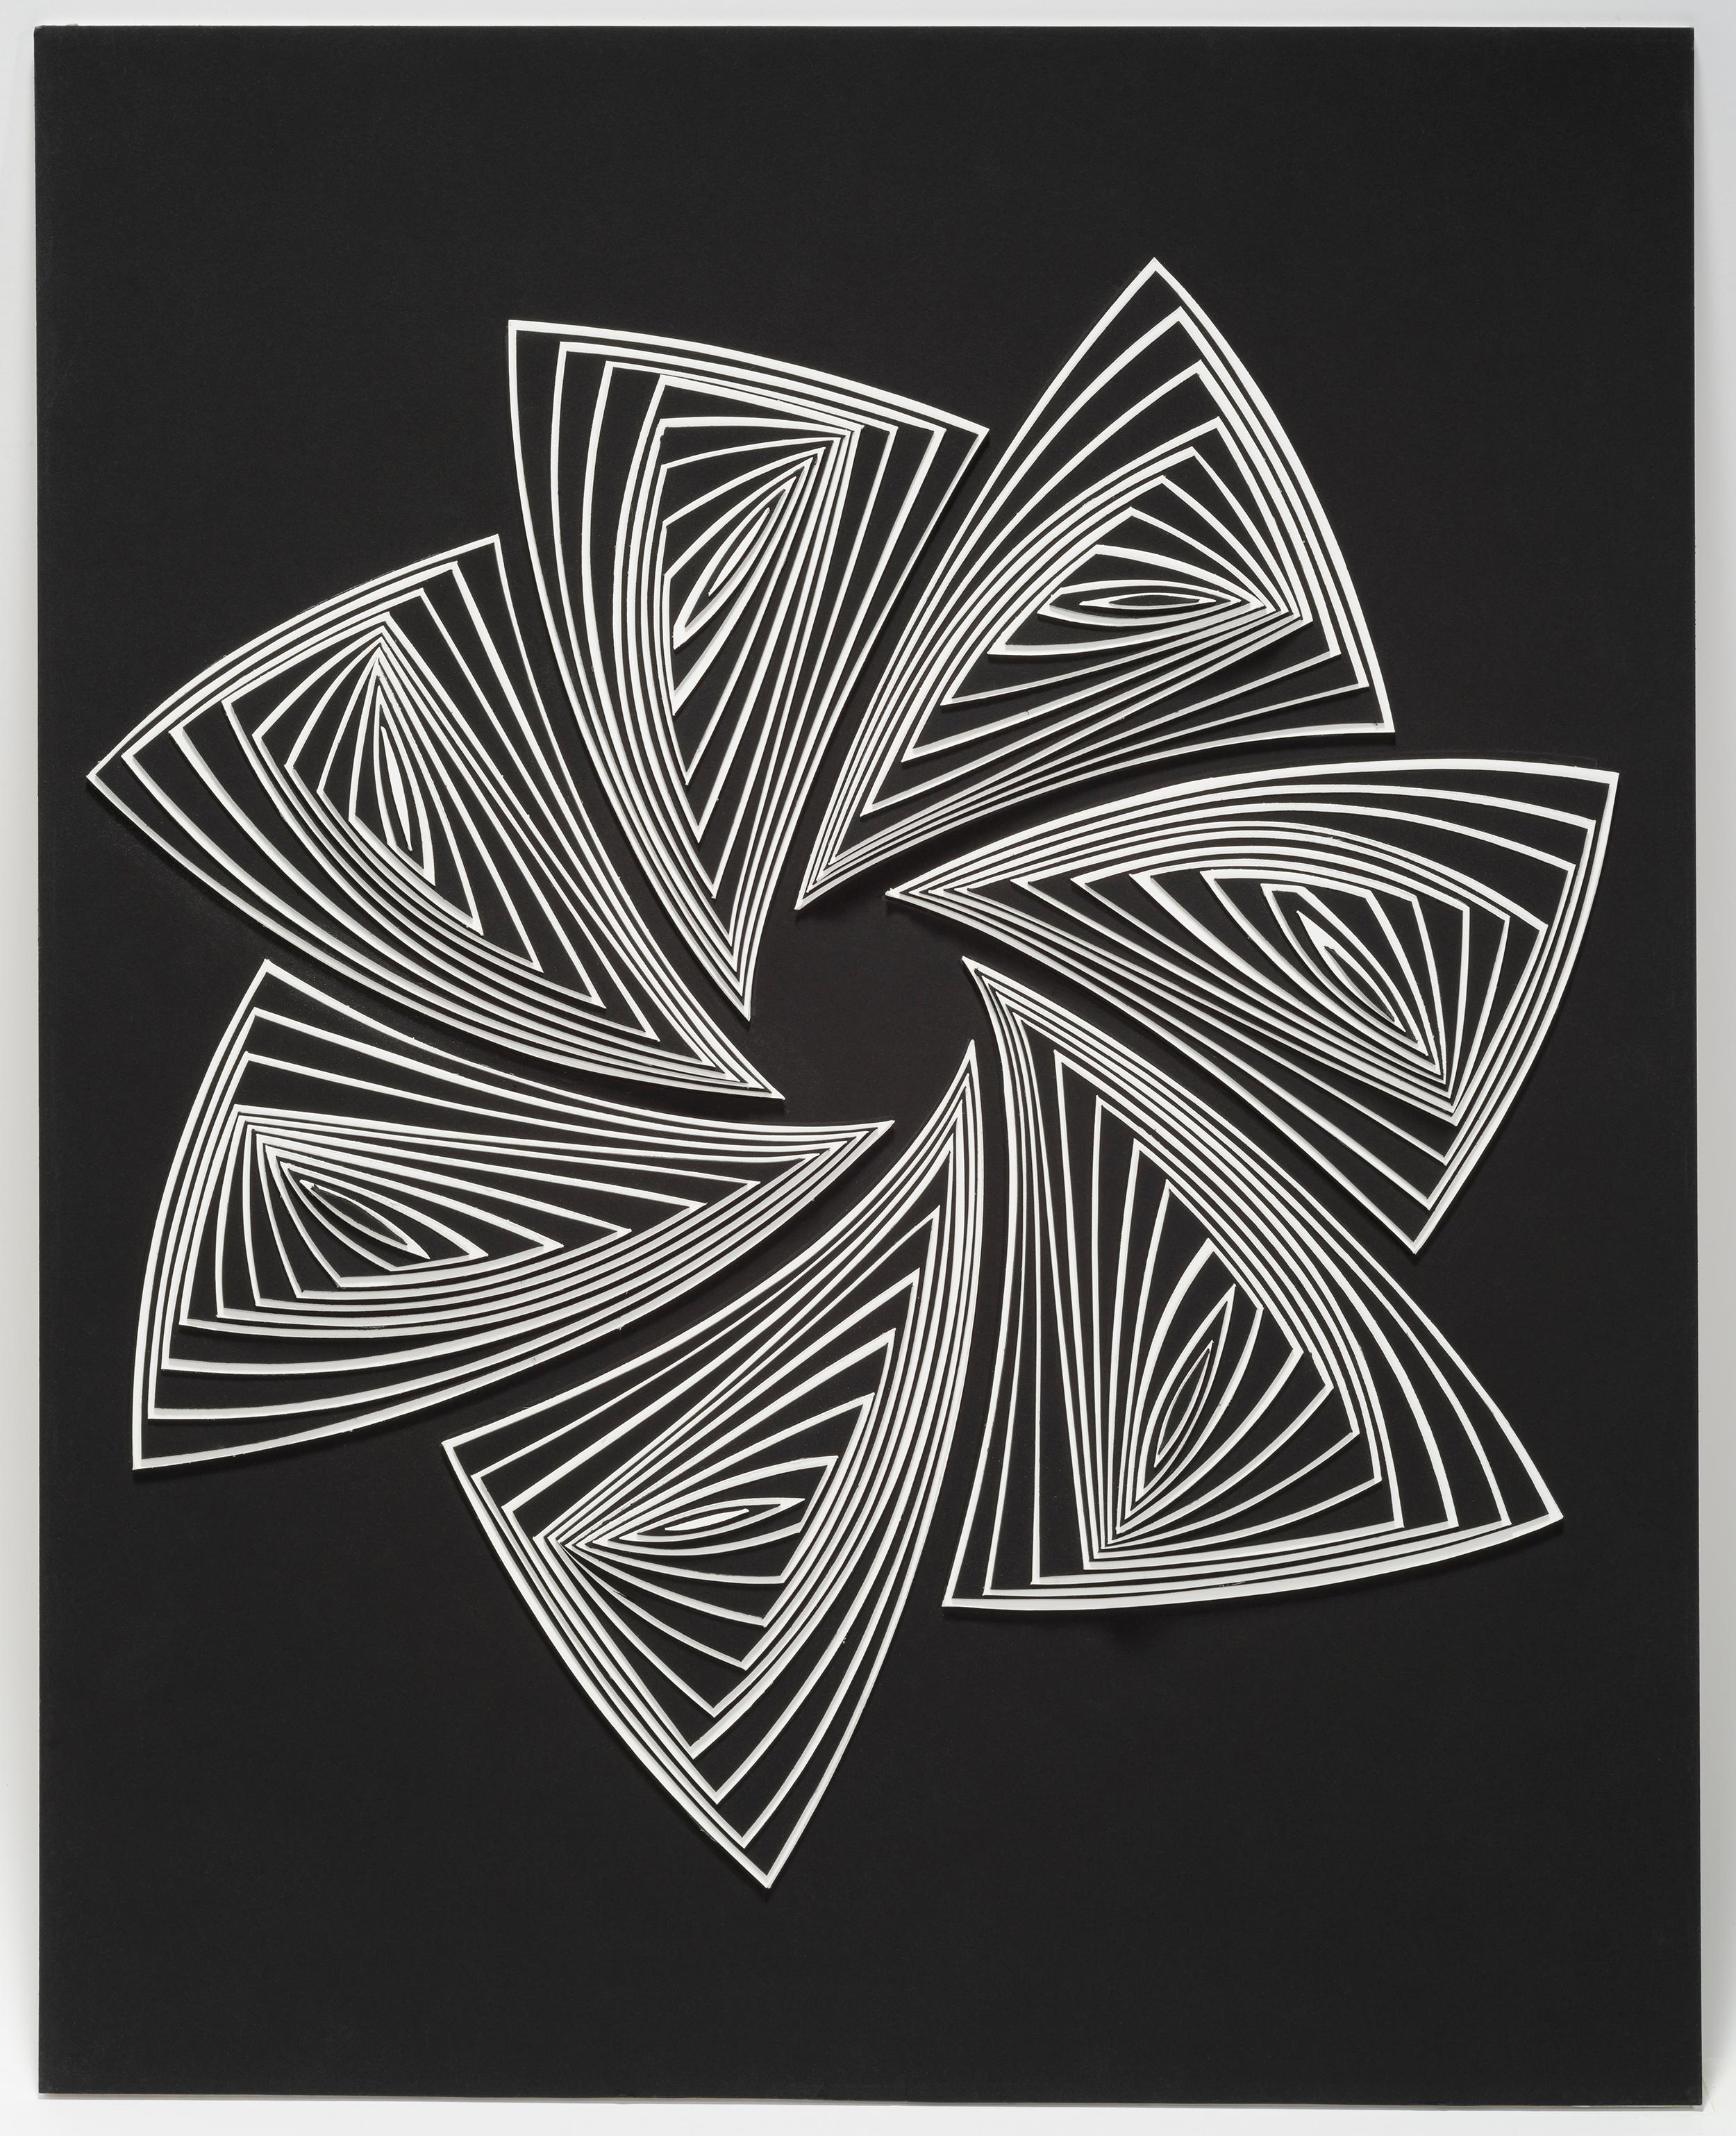 Abstract Painting Elizabeth Gregory-Gruen - Découpage : "Black White Flip Star-In" (noir et blanc)	